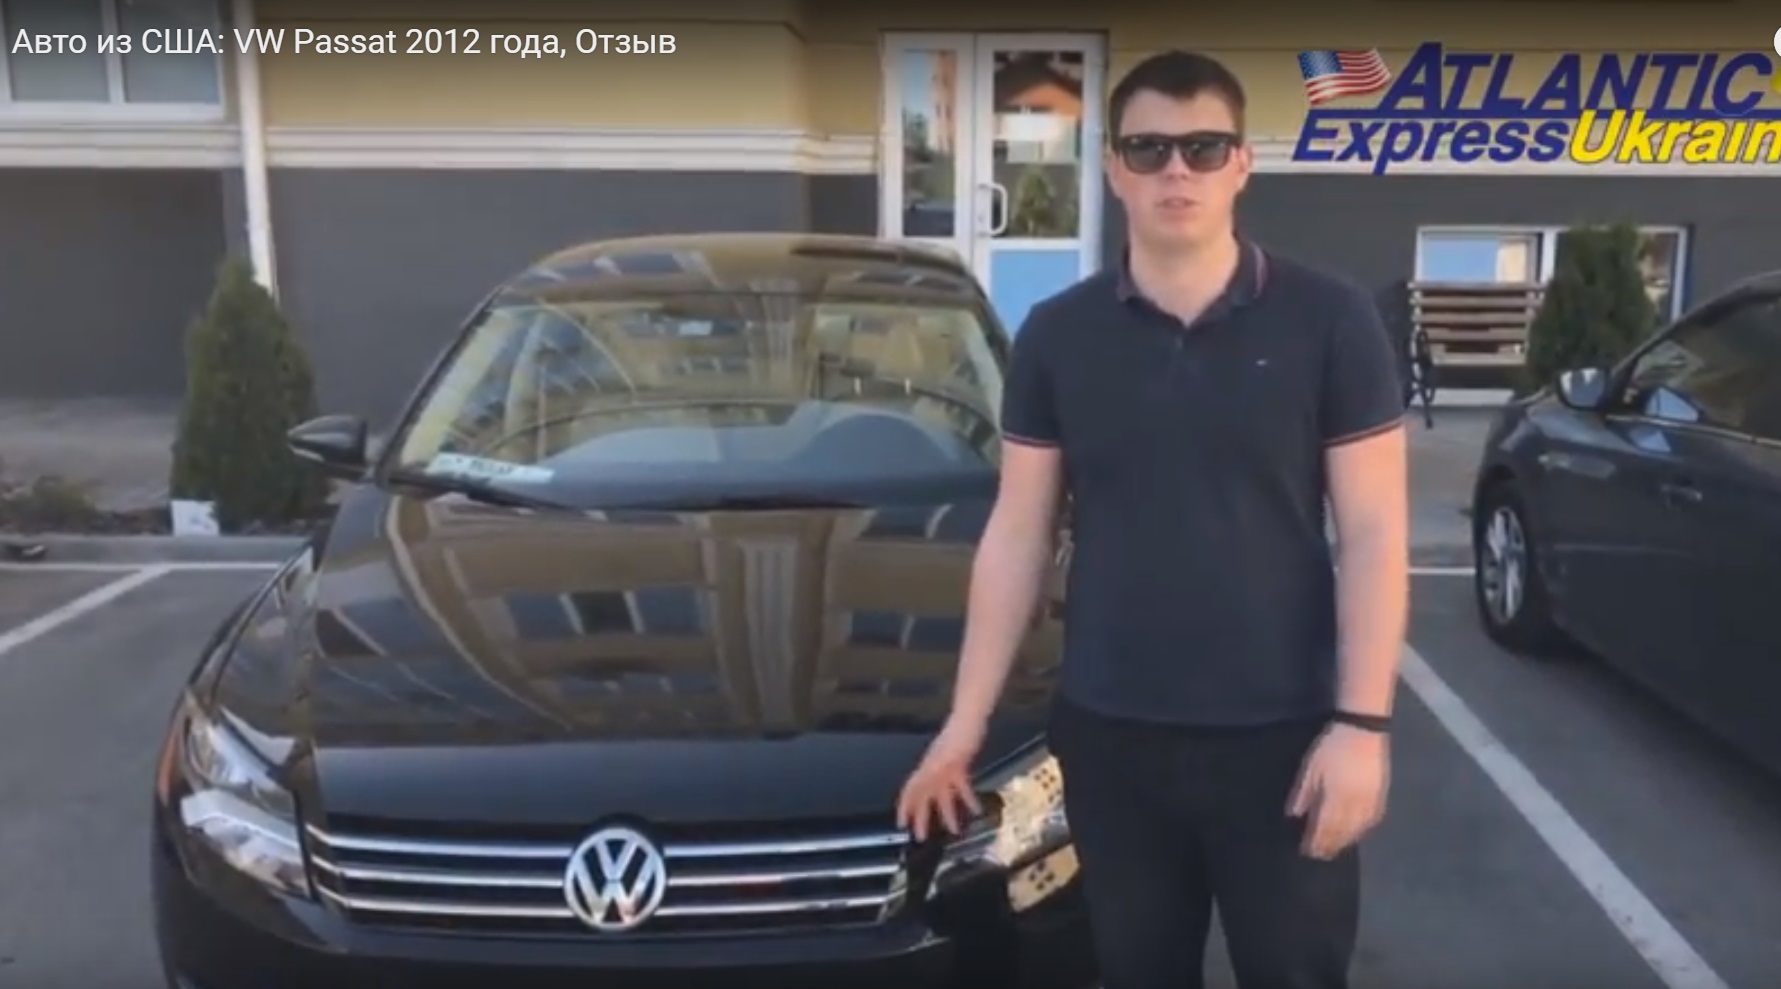 Авто из США: Oтзыв о покупке VW Passat